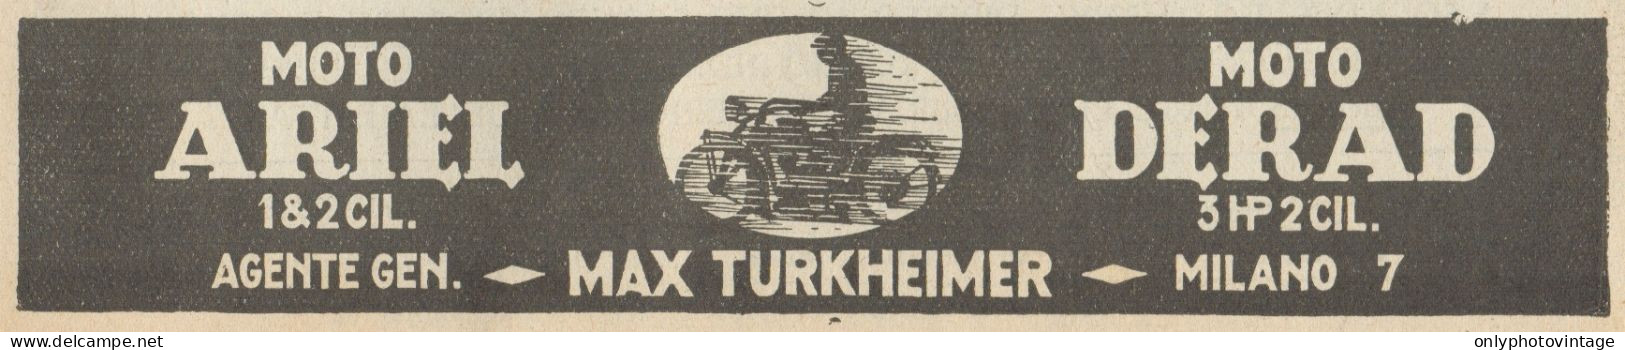 Moto ARIEL & DERAD - Pubblicità D'epoca - 1923 Old Advertising - Advertising